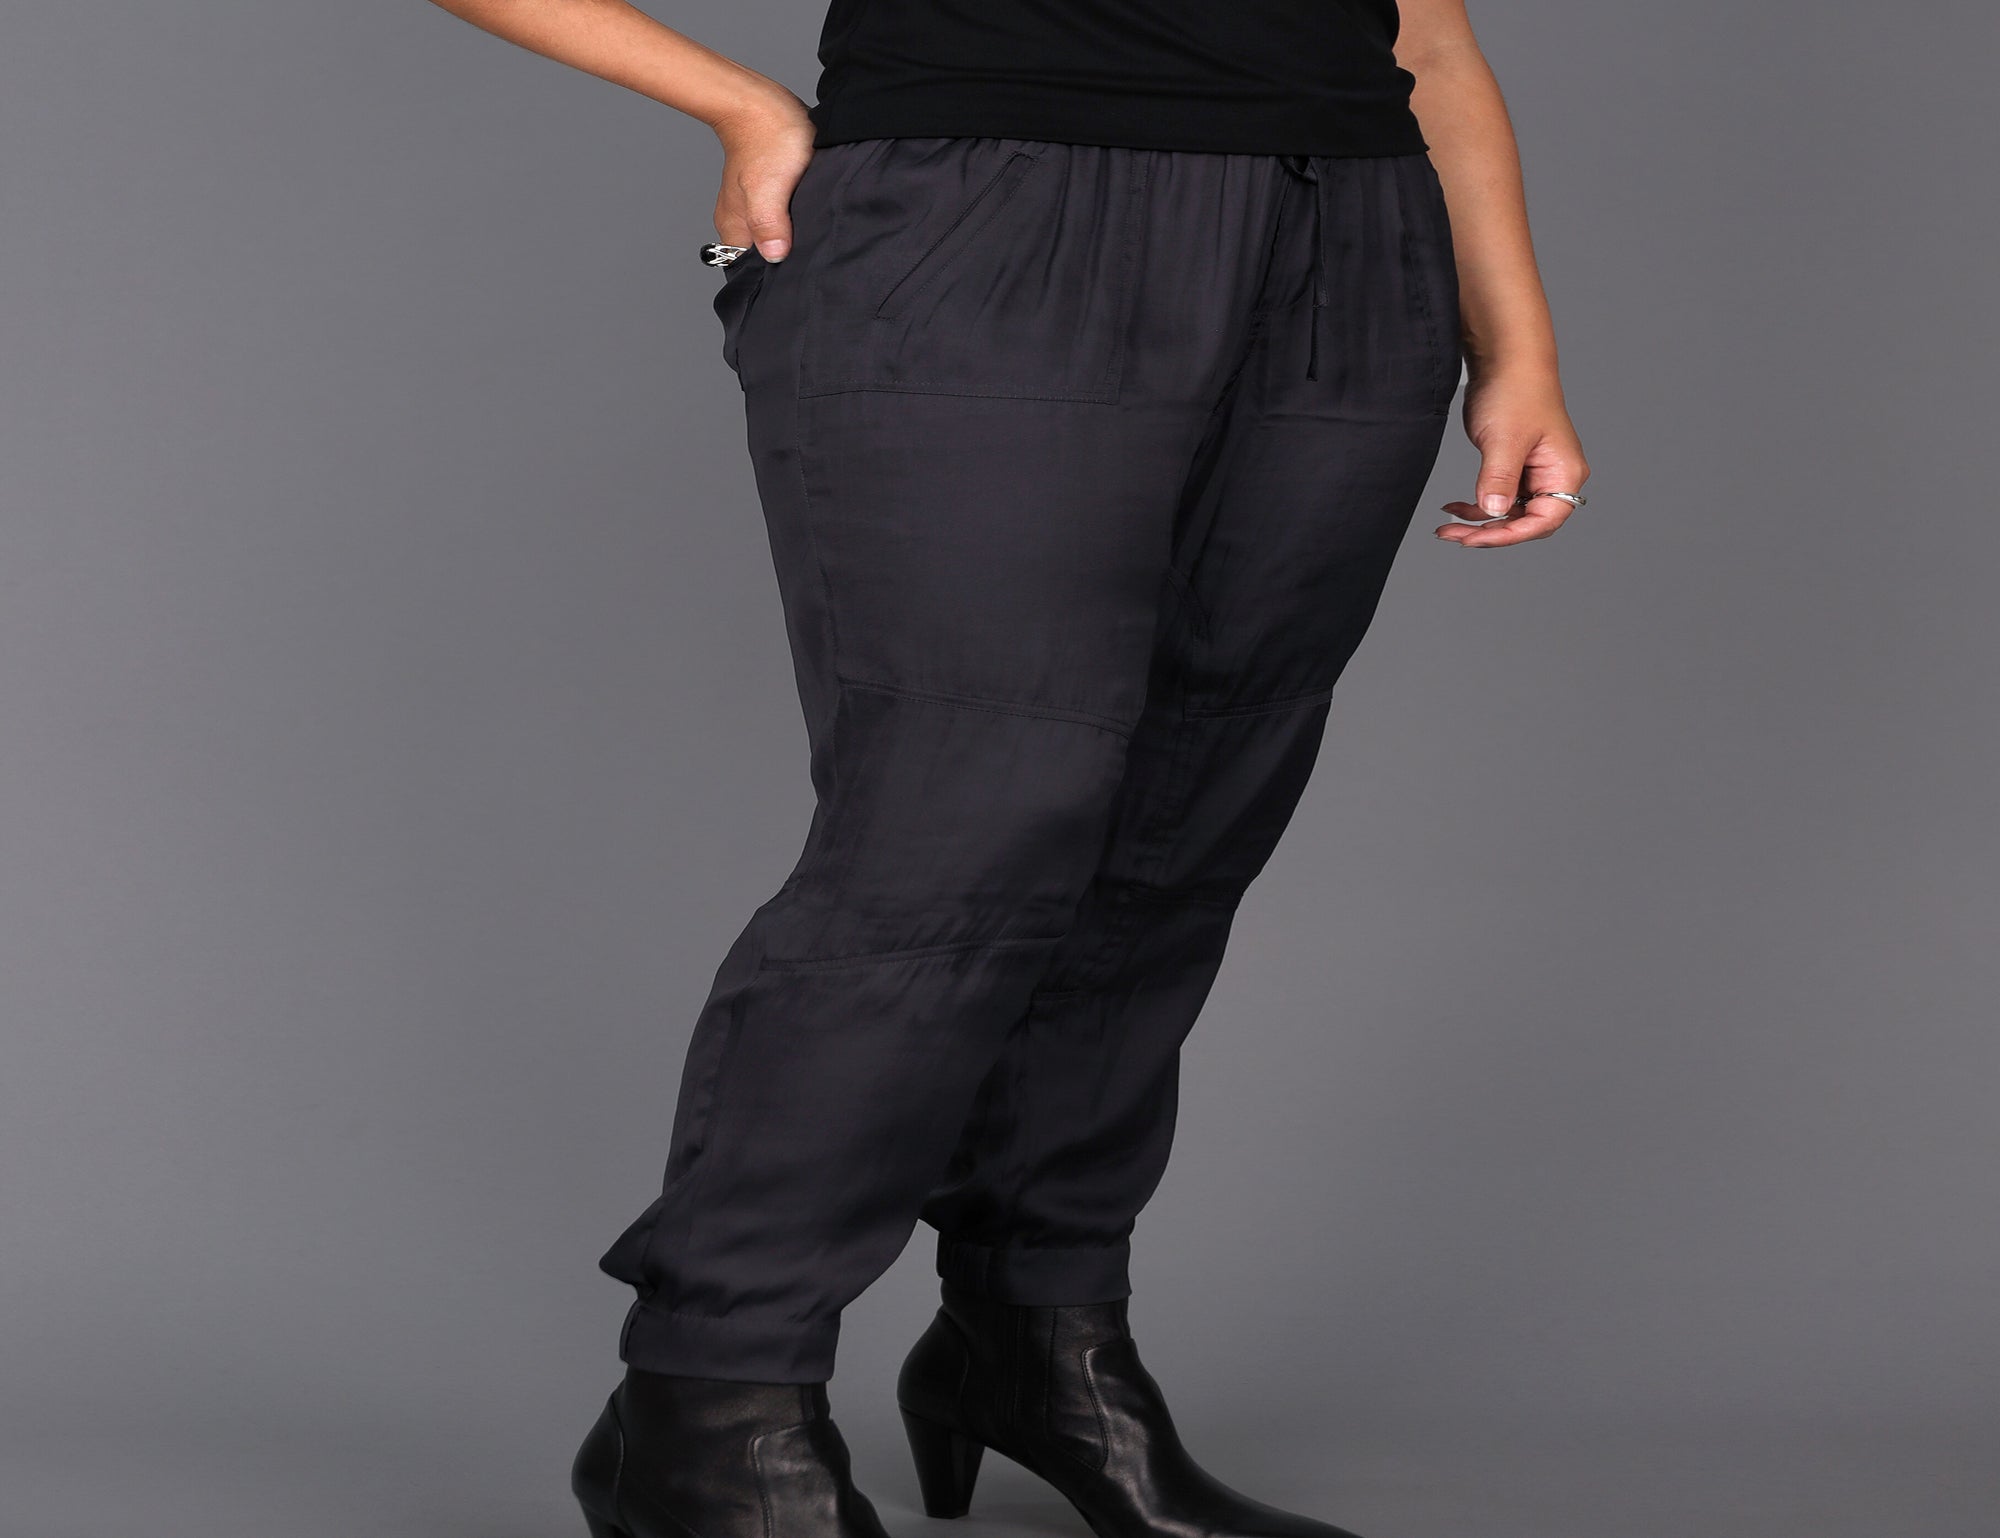 Satin Tuxedo Pant - Black - Pants - Full Length - Women's Clothing - Storm